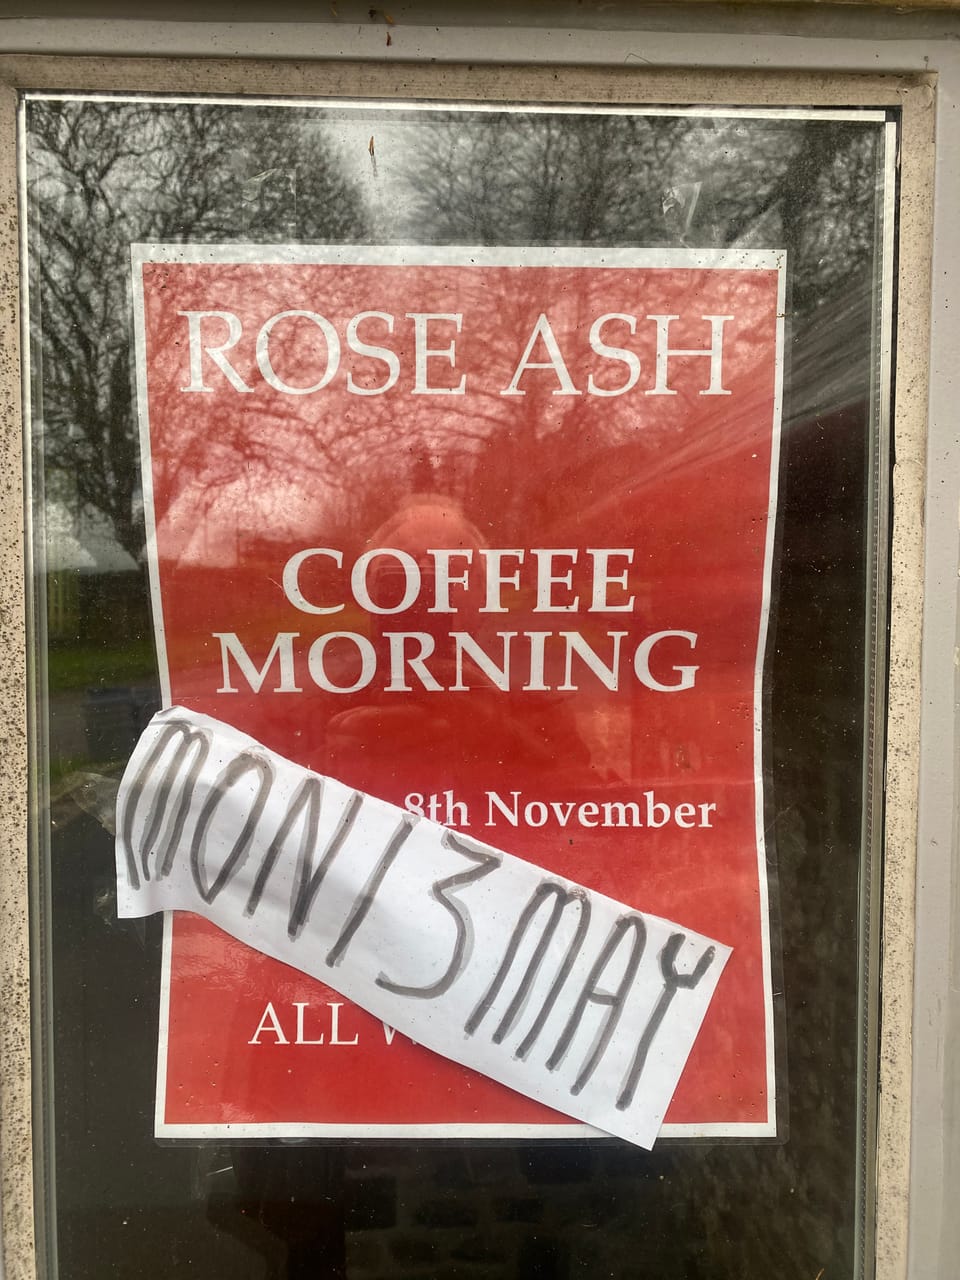 Monday 13th May - Coffee Morning @ Rose Ash Village Hall